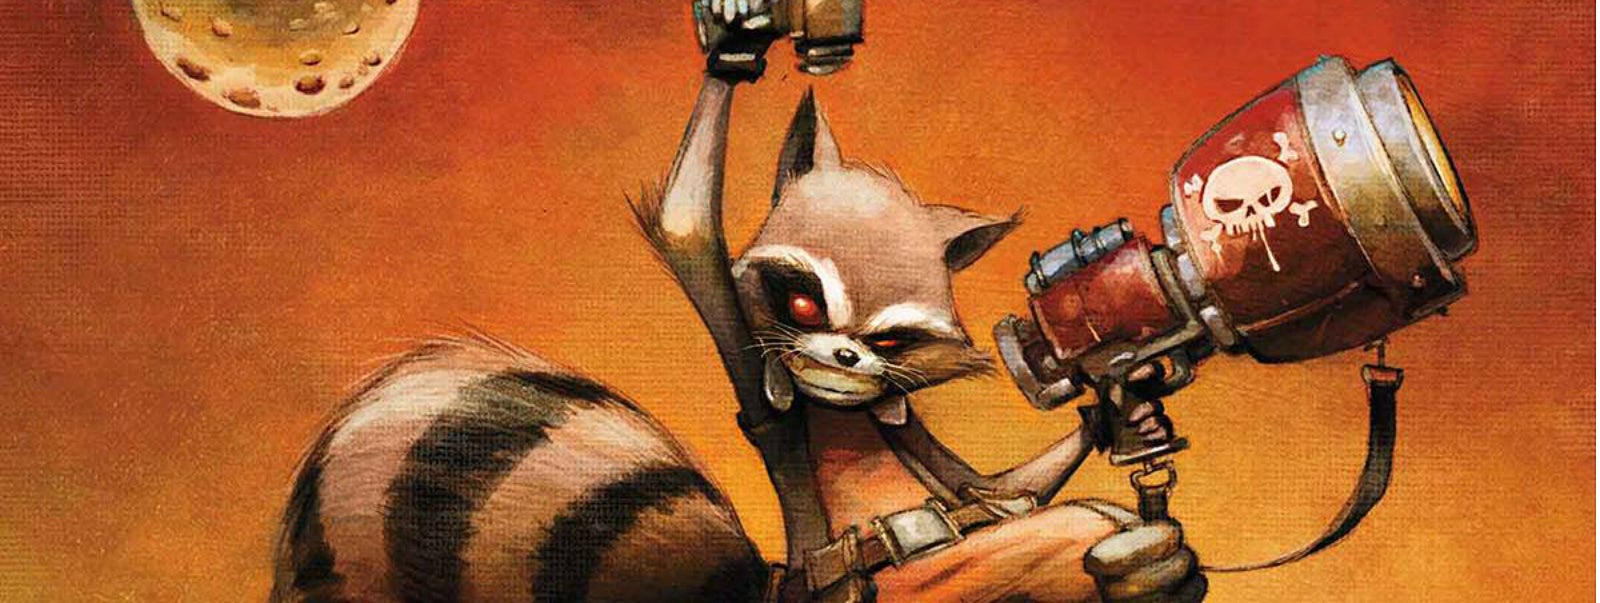 Rocket Raccoon #1 Review - IGN Image